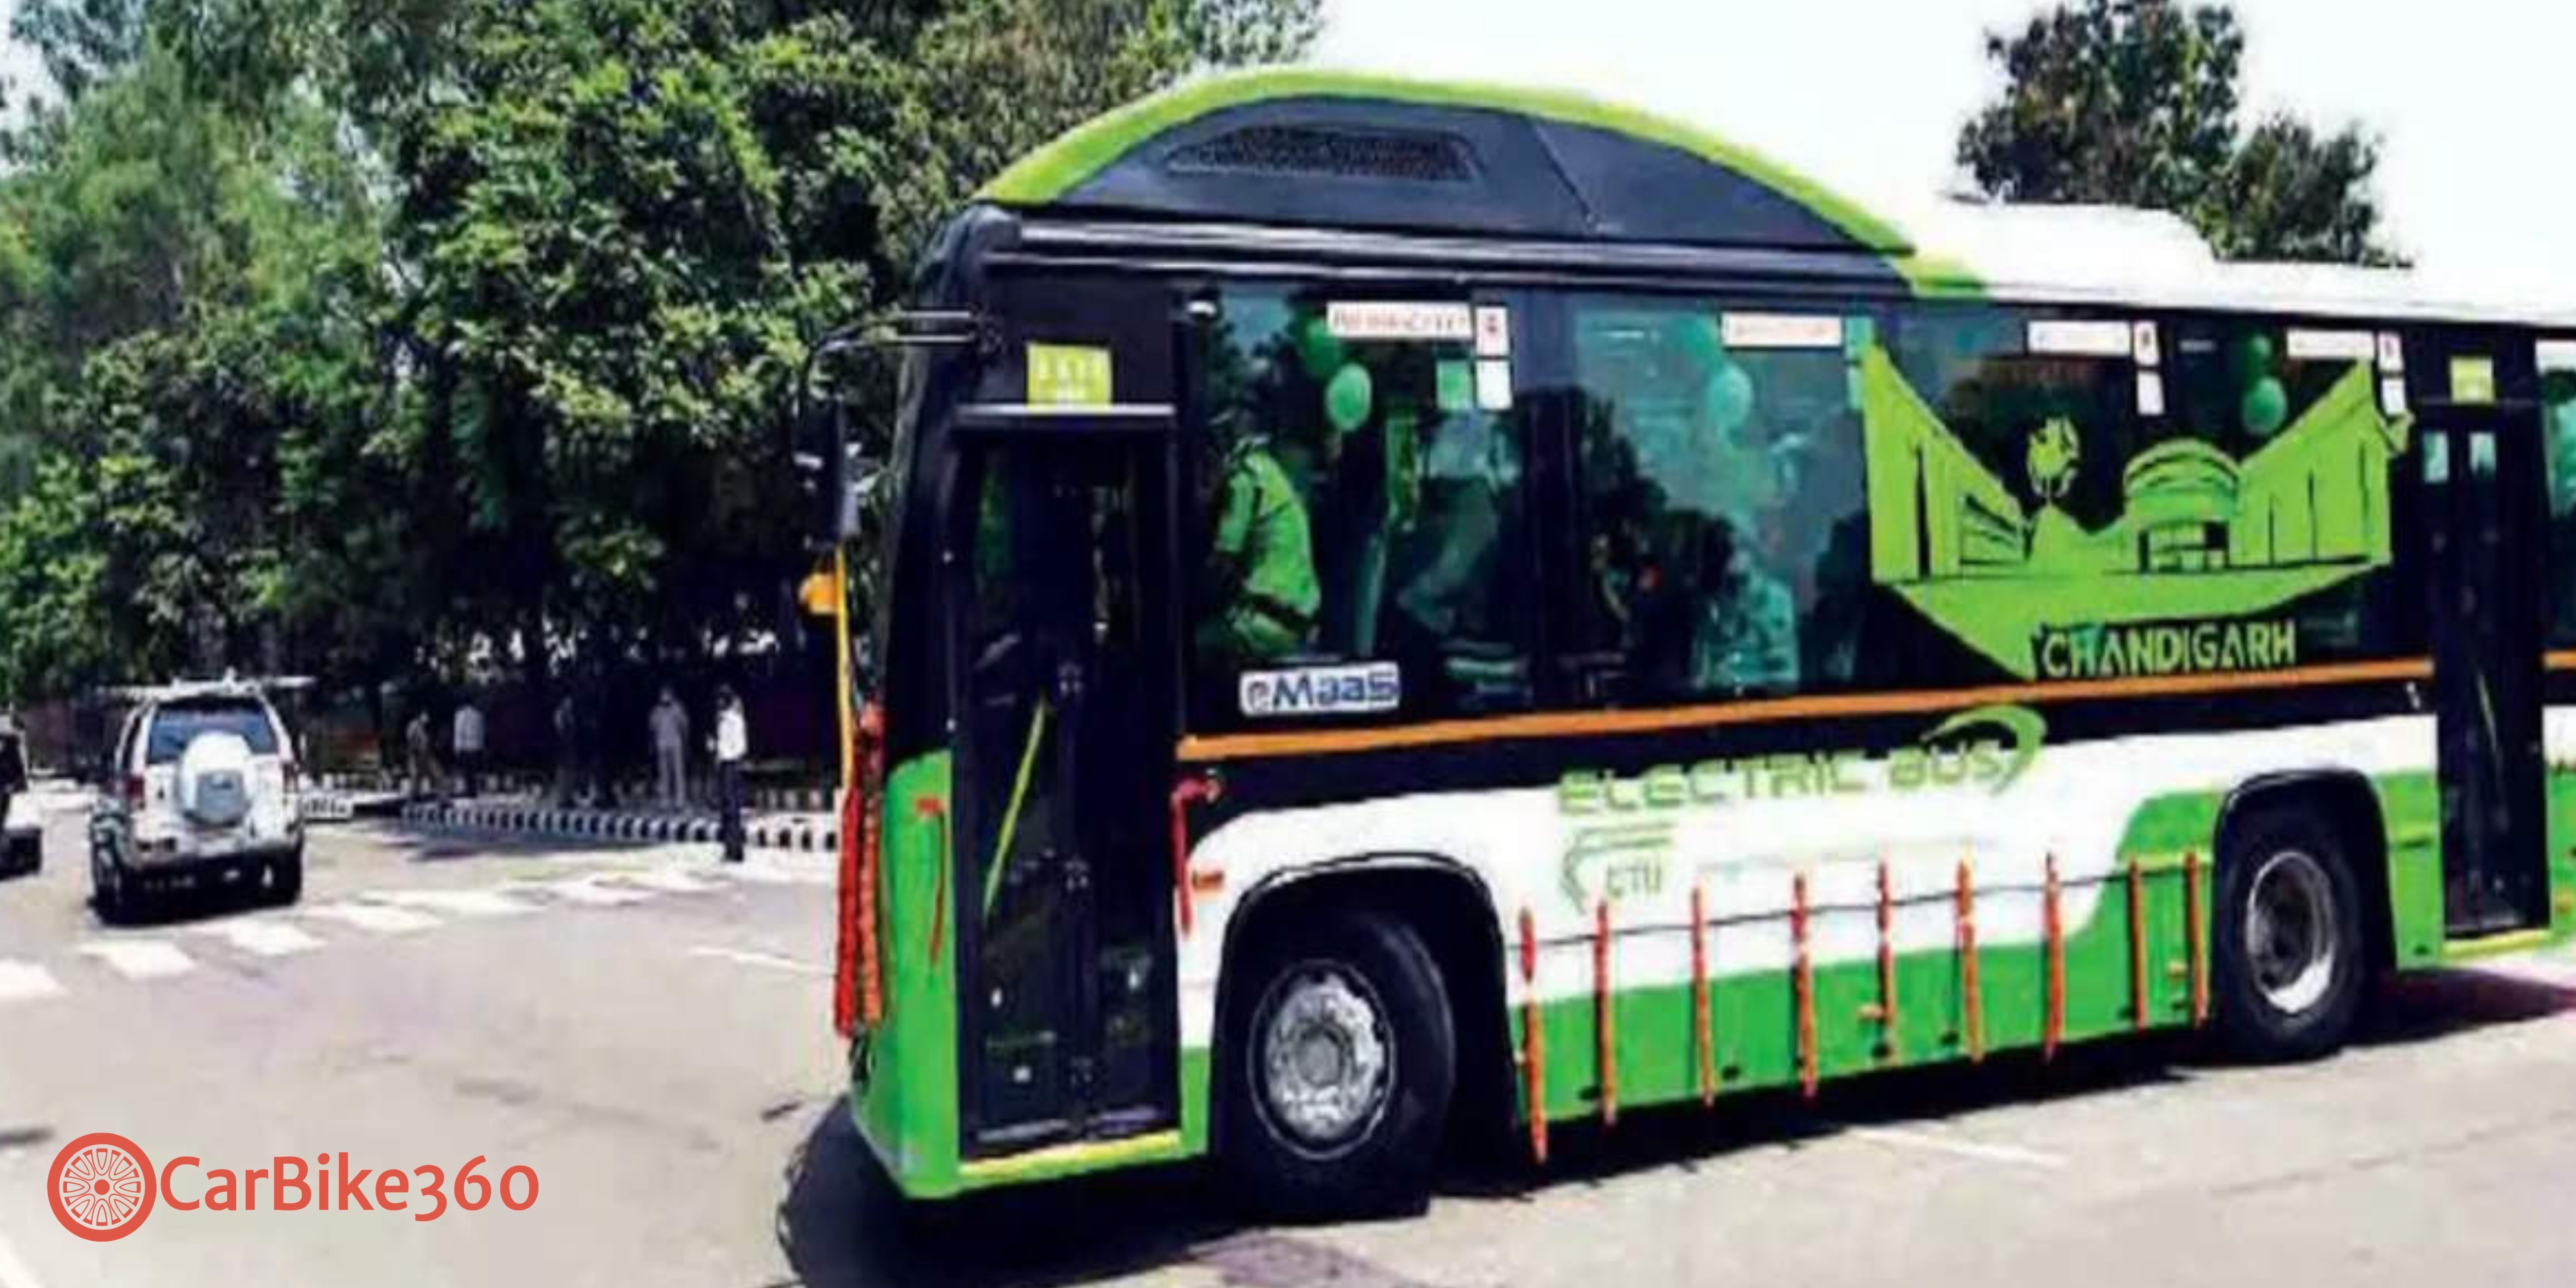 electric buses in Chandigarh, Ashok leyland.jpg